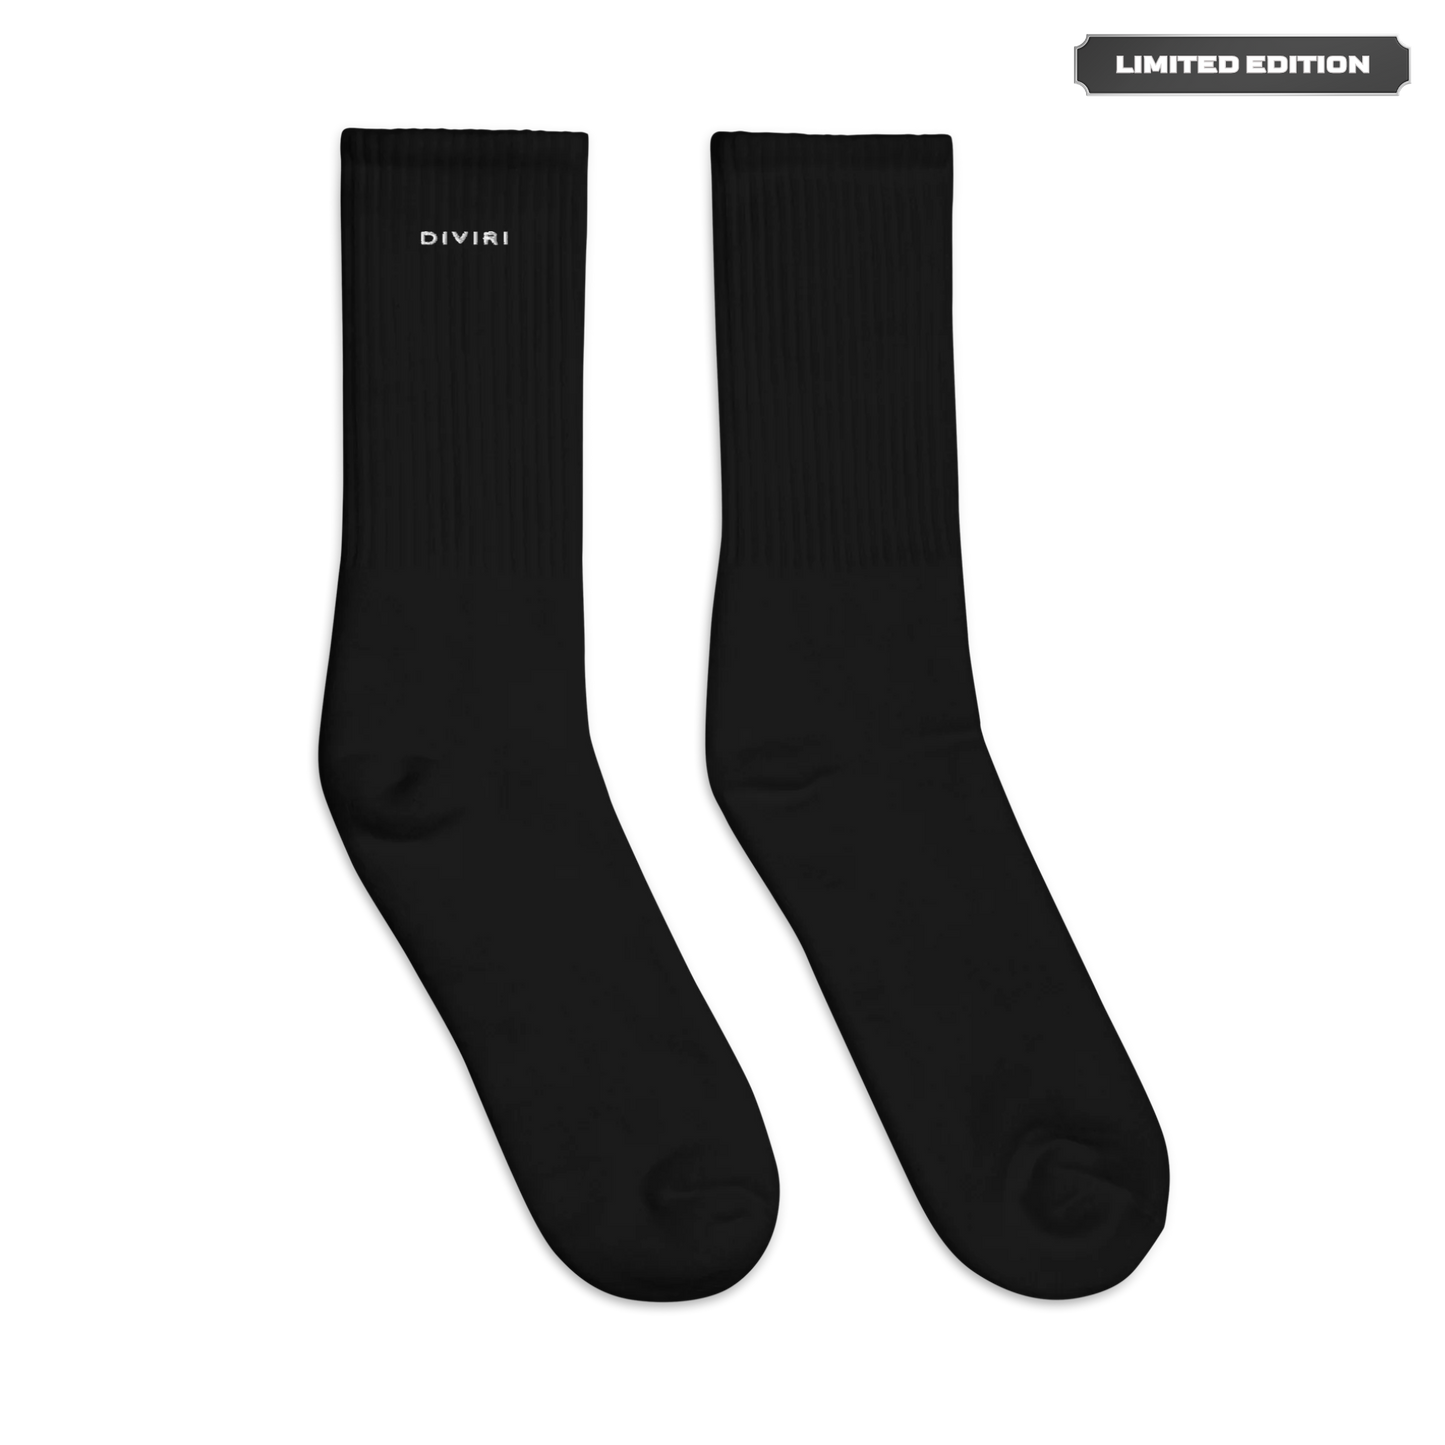 DIVIRI Premium Socks (Limited Edition)